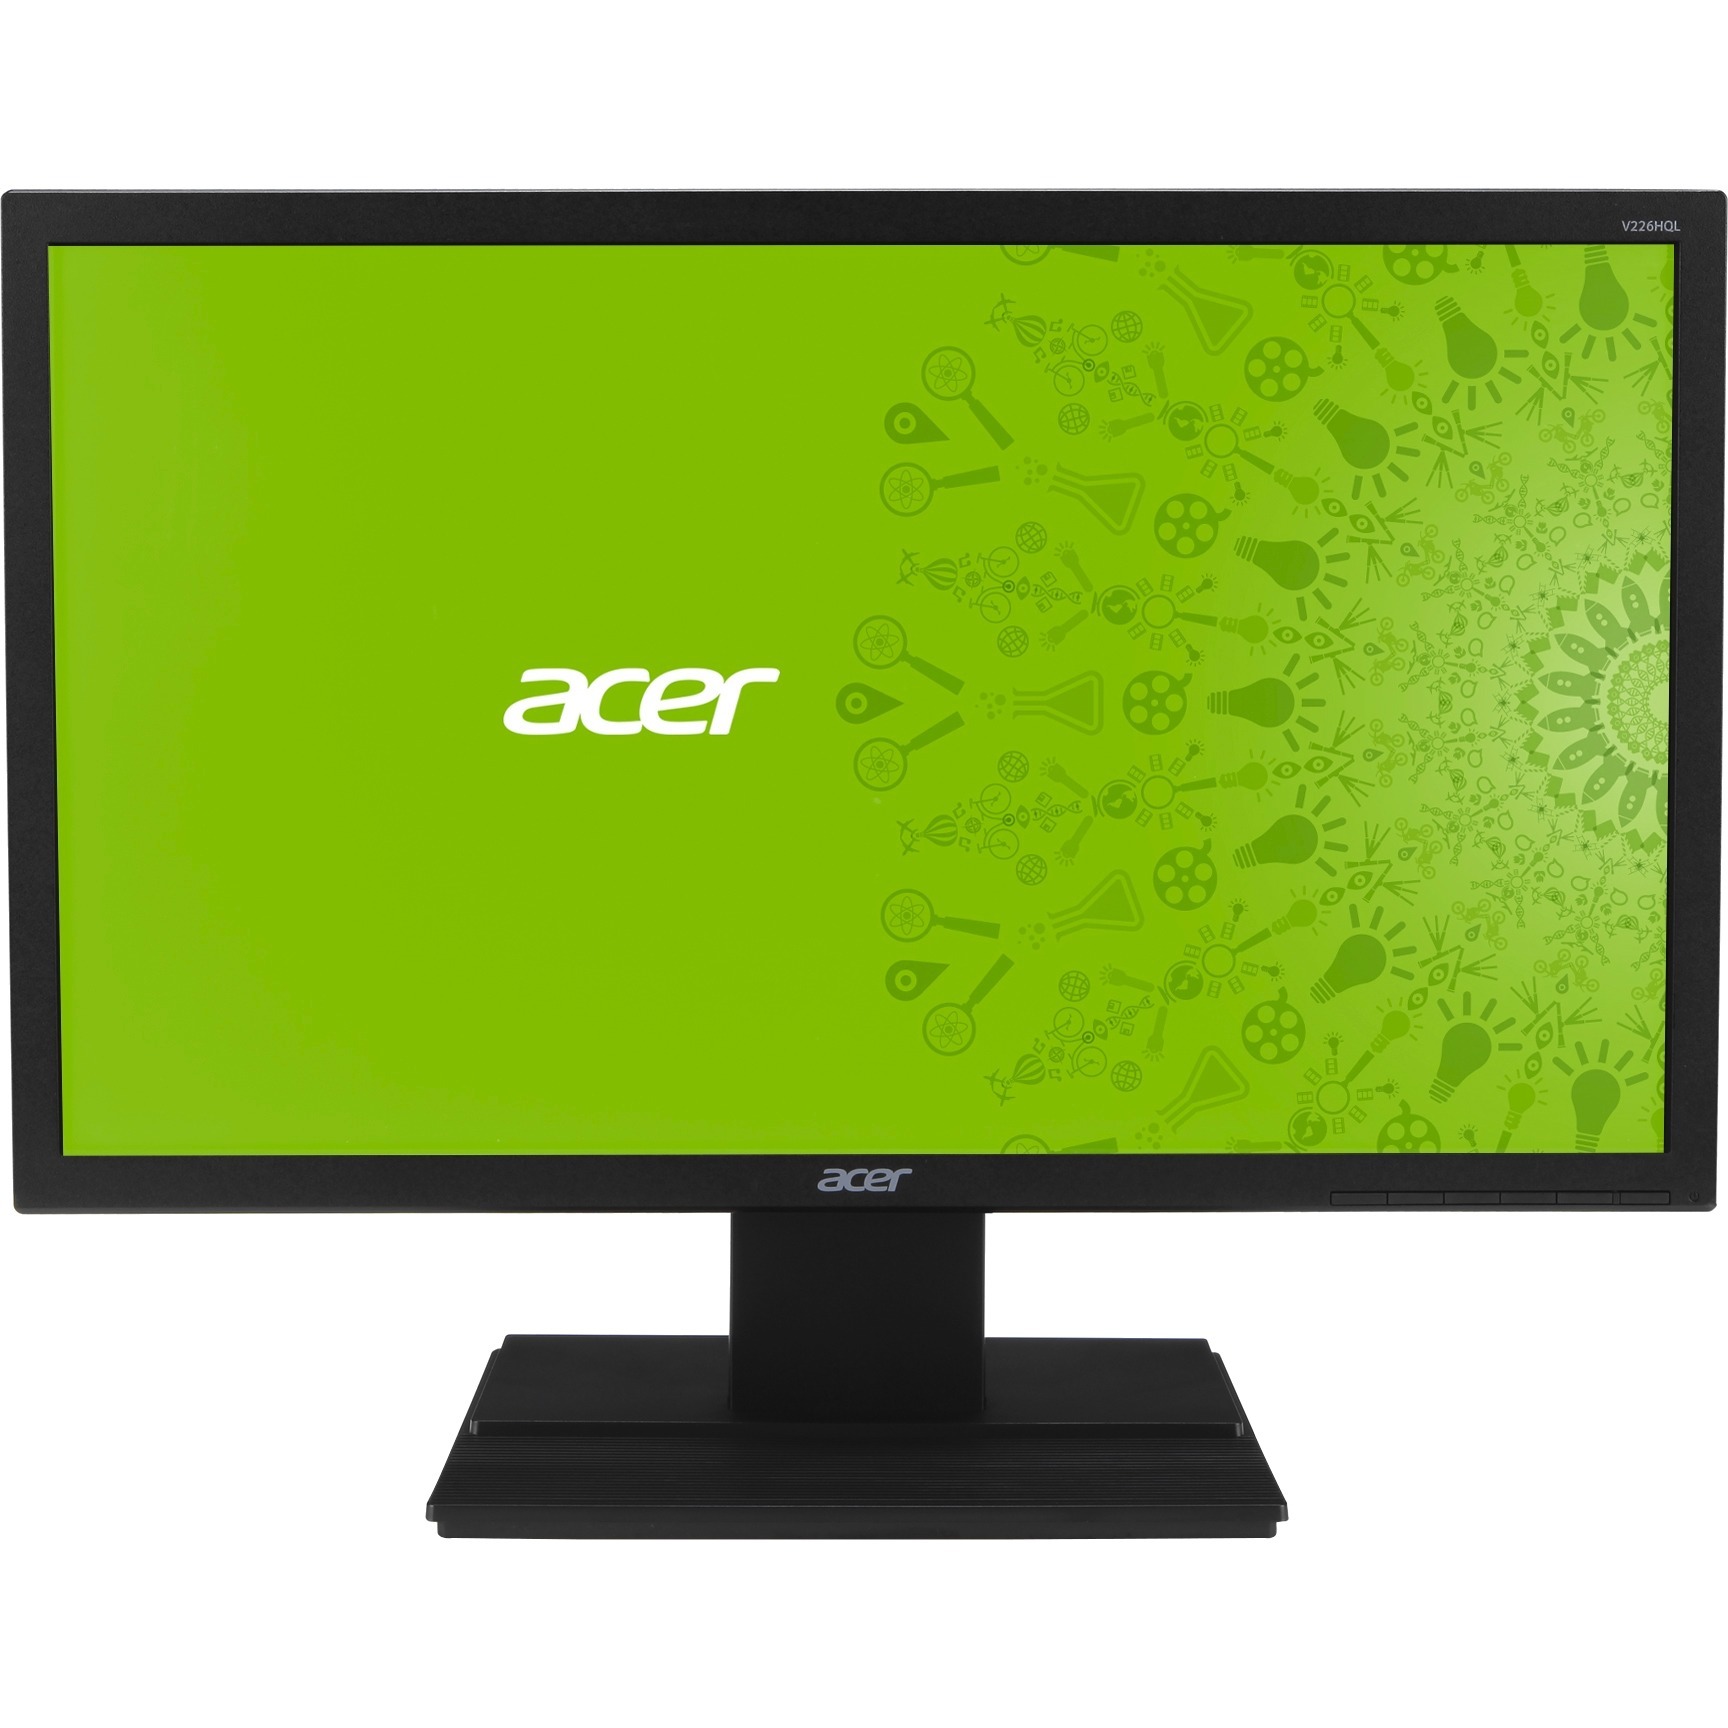 Acer V226HQL 21.5in LED FHD Monitor